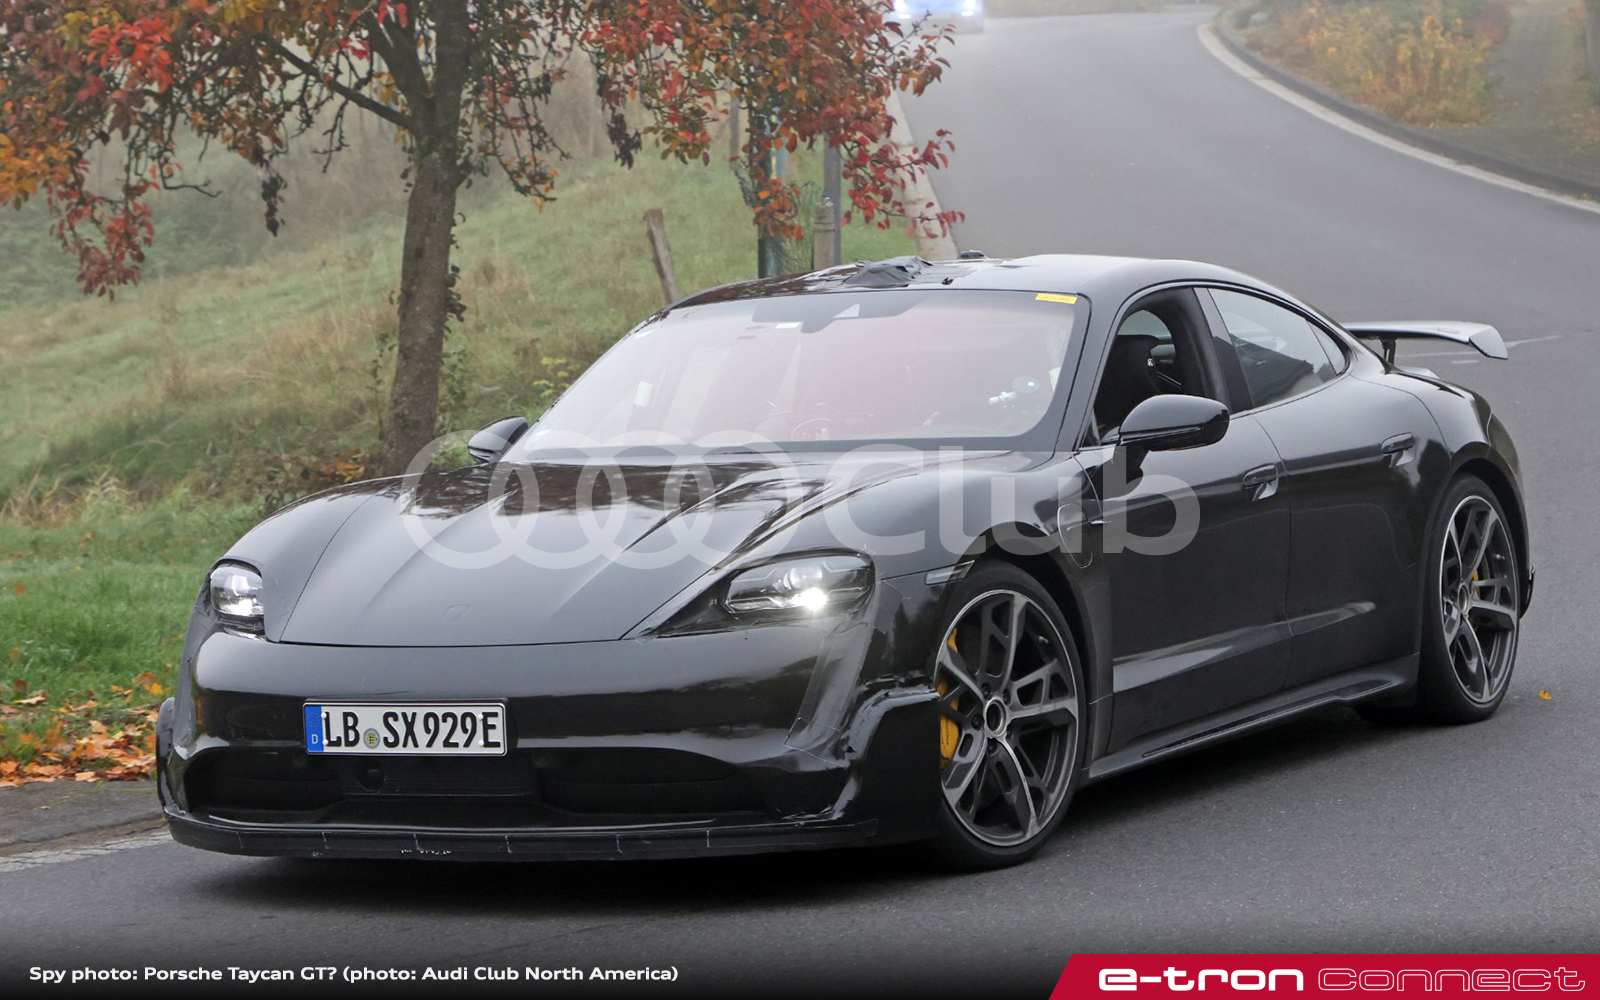 Spy Photo: Porsche Taycan GT? - e-tron connect